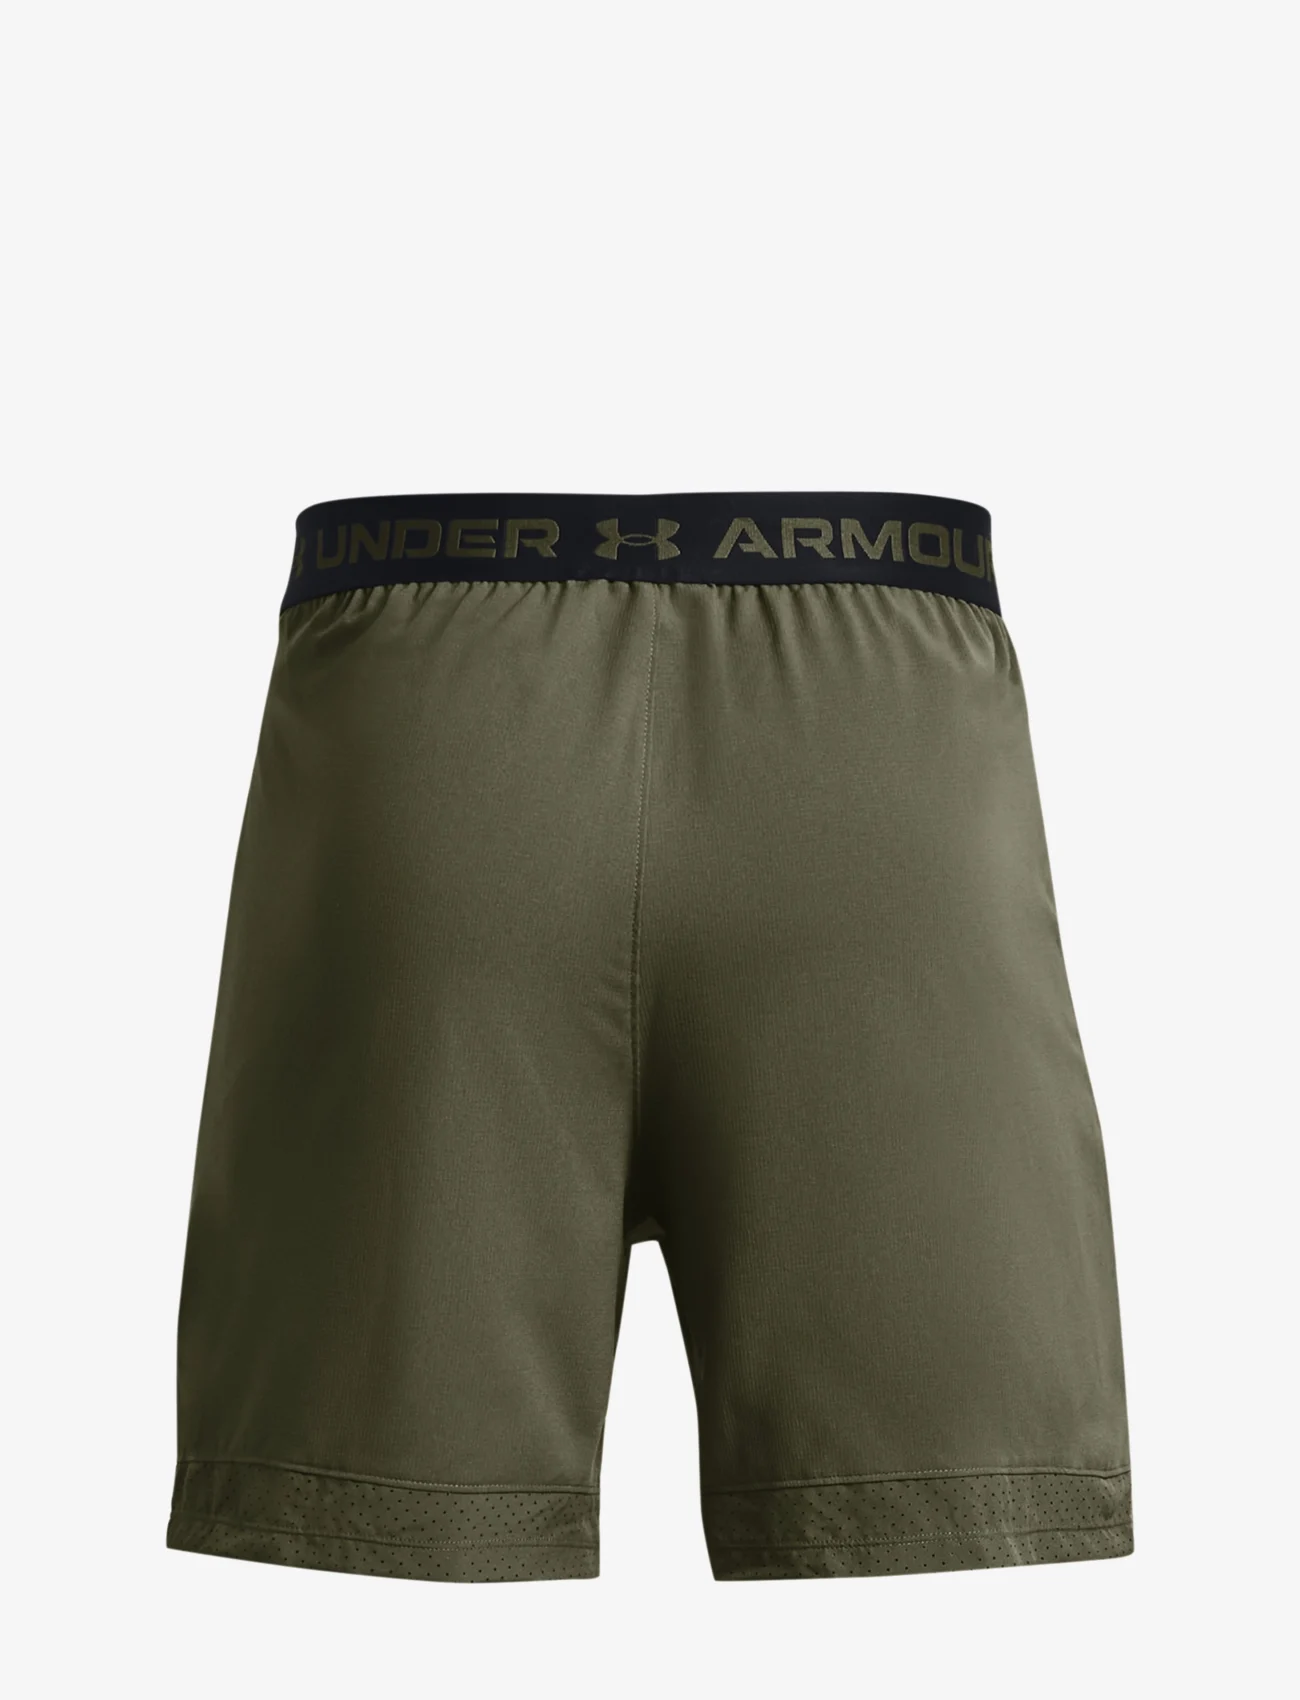 Under Armour - UA Vanish Woven 6in Shorts - training shorts - marine od green - 1